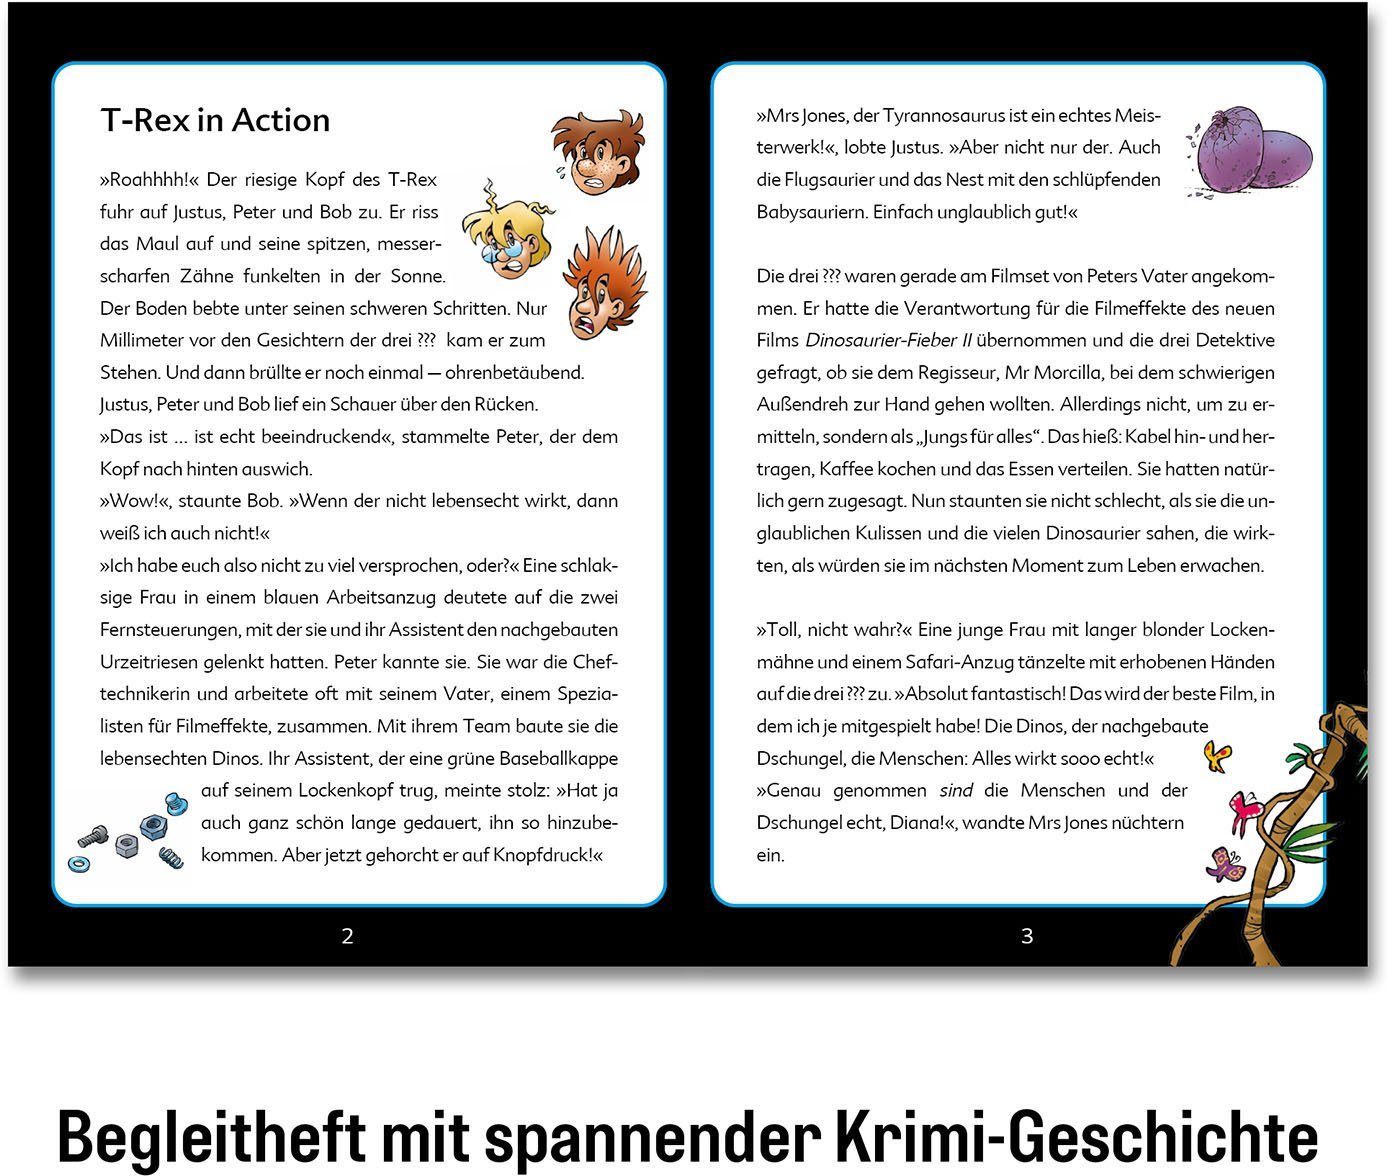 Image of Kosmos Die drei ??? Kids Krimi-Puzzle "T-Rex in Action", 200 Teile + Ausgrabungs-Set